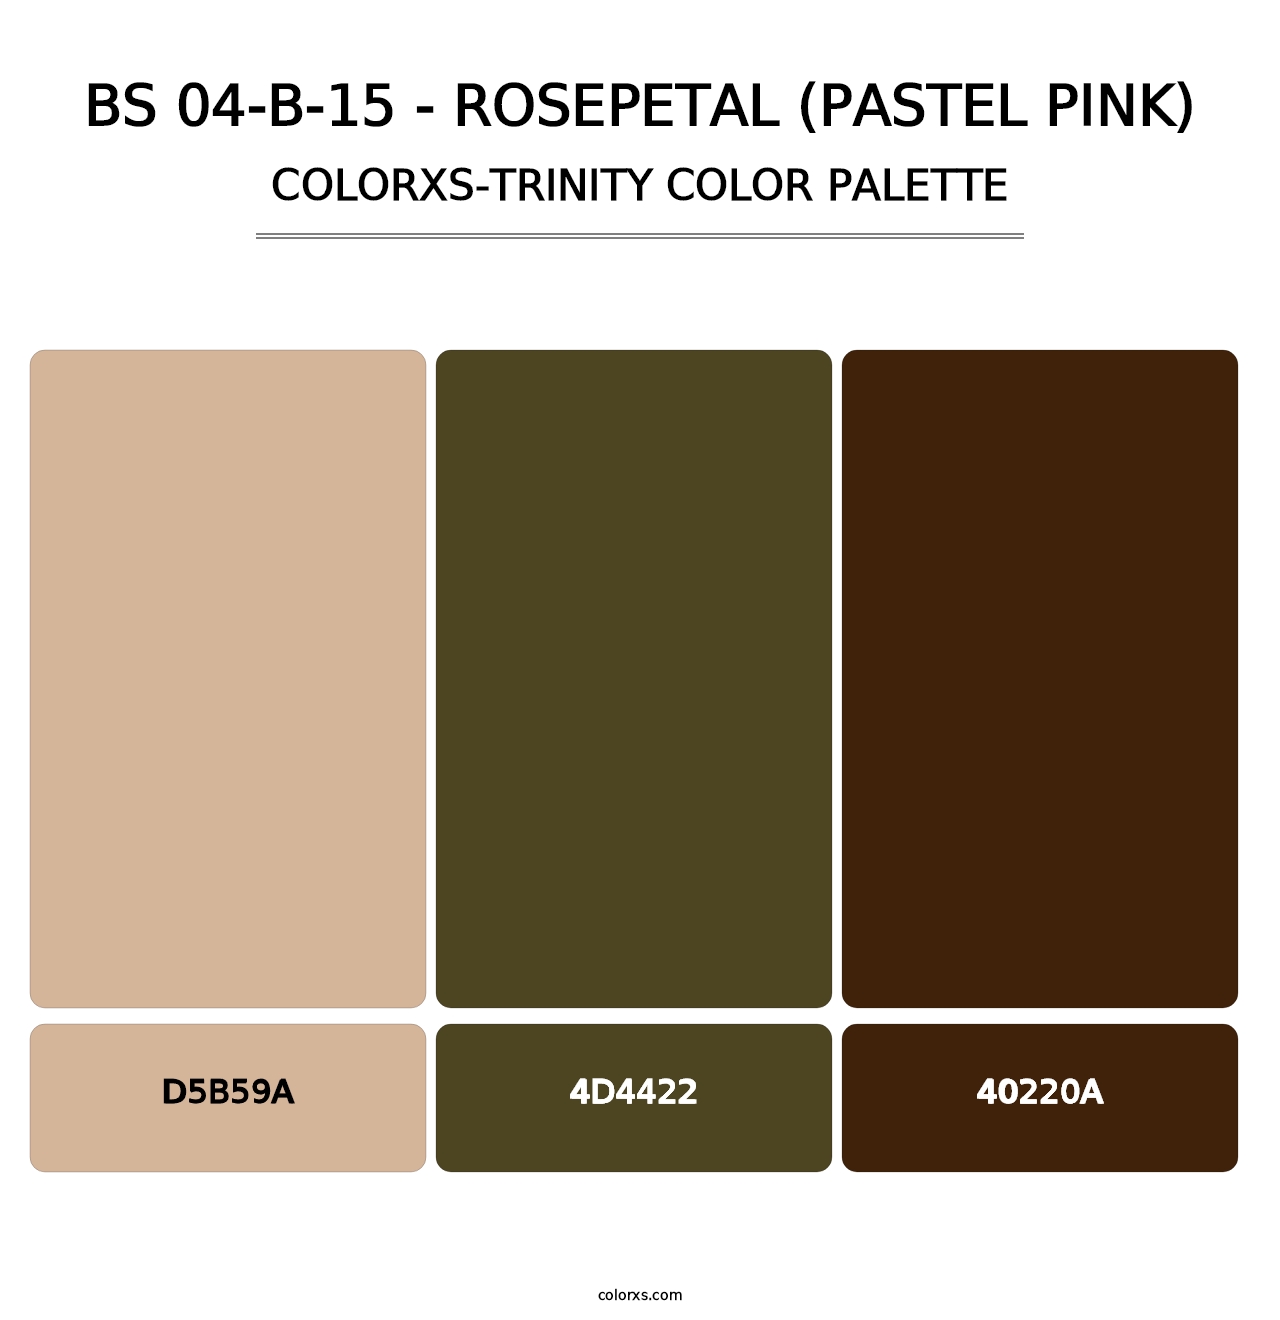 BS 04-B-15 - Rosepetal (Pastel Pink) - Colorxs Trinity Palette